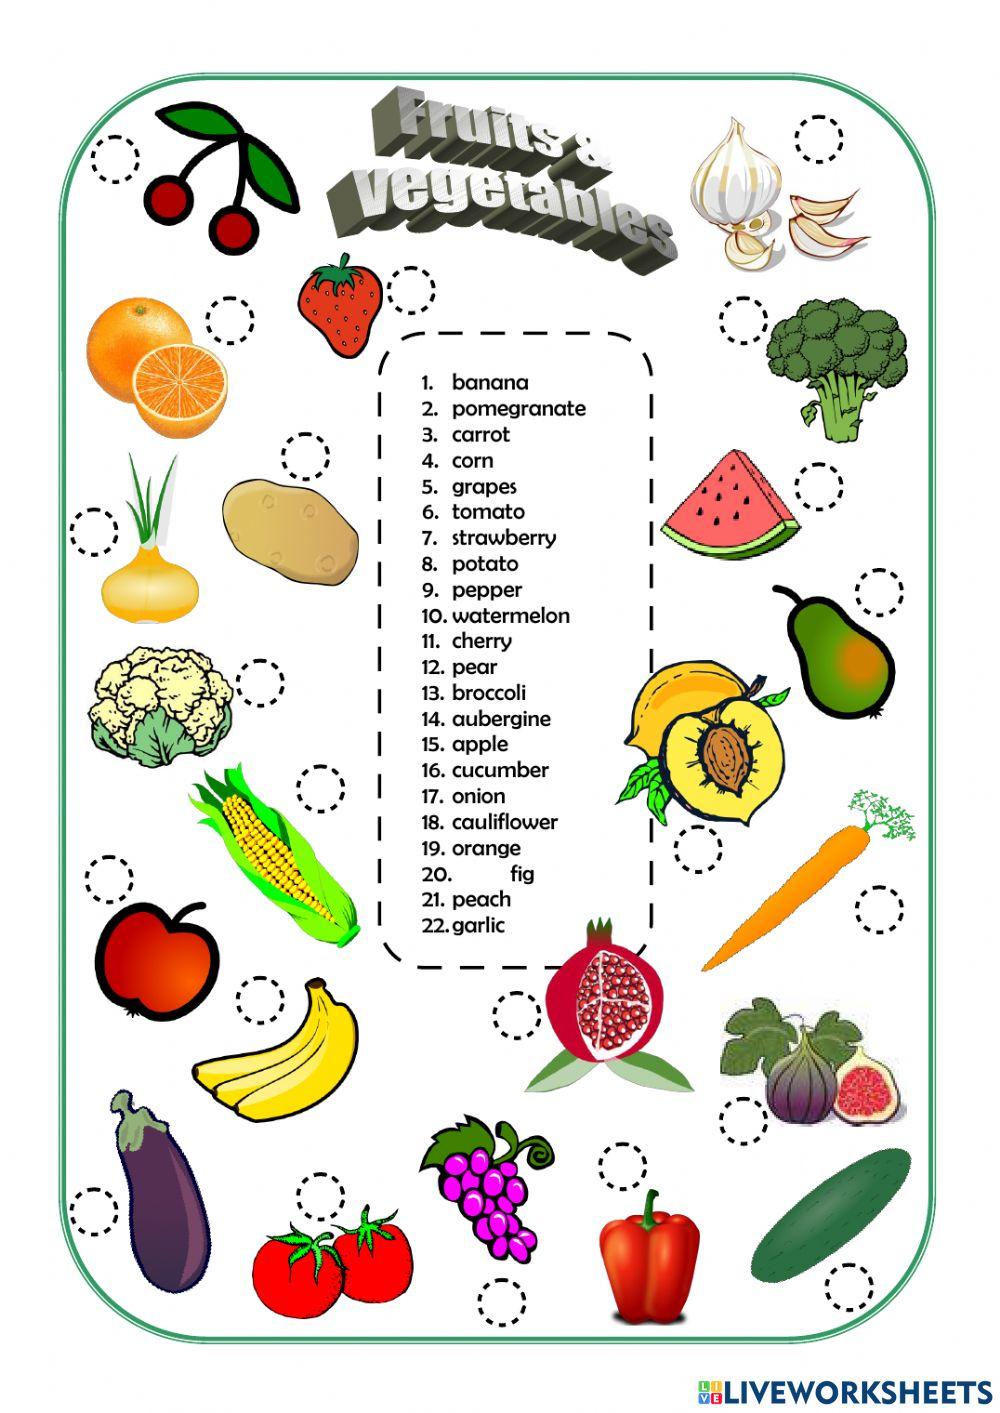 Food and health - Worksheet 1